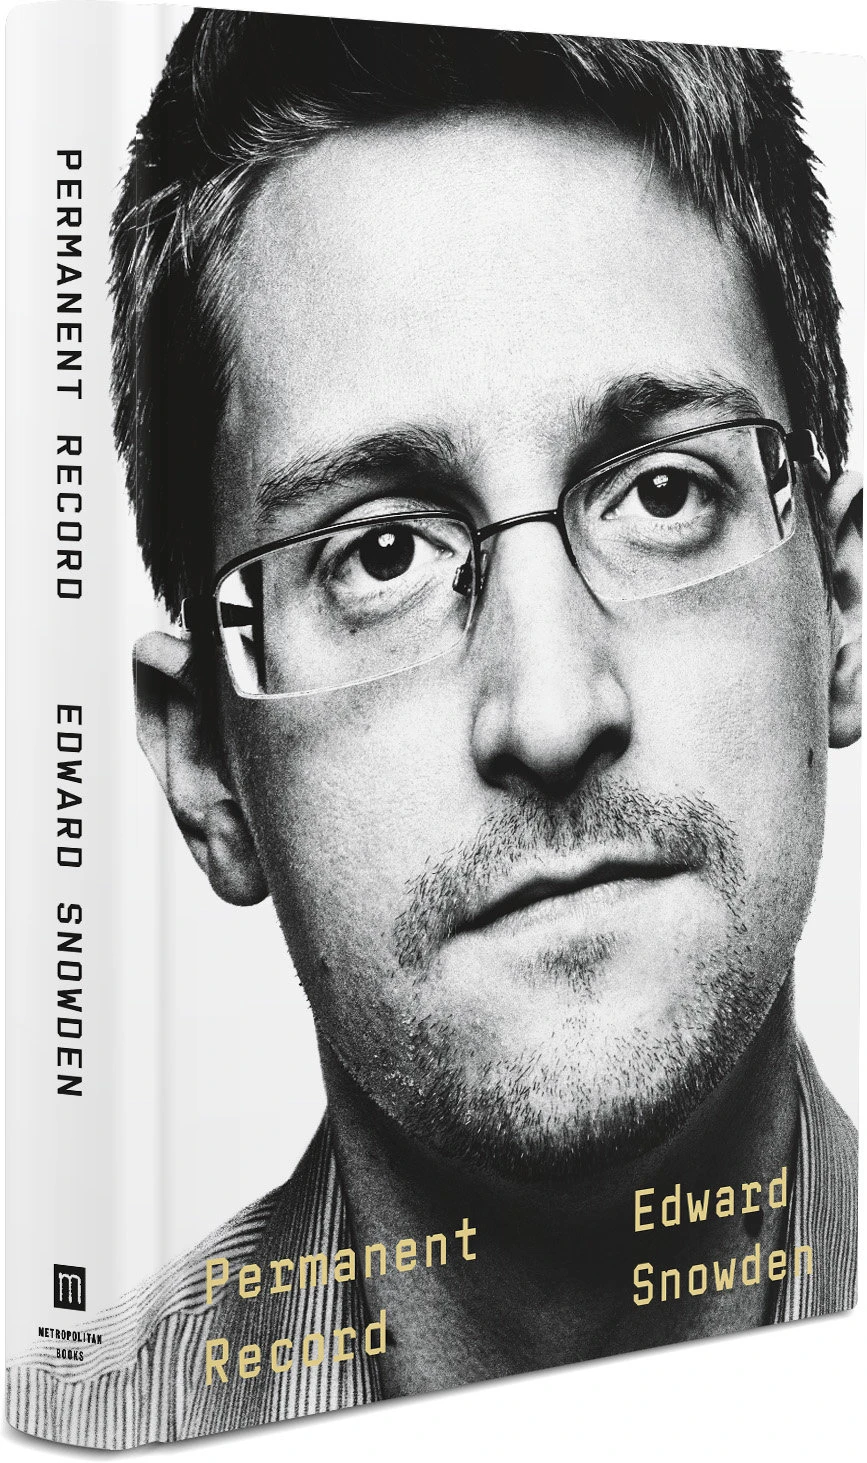 Edward Snowden’s Memoir is coming in September.